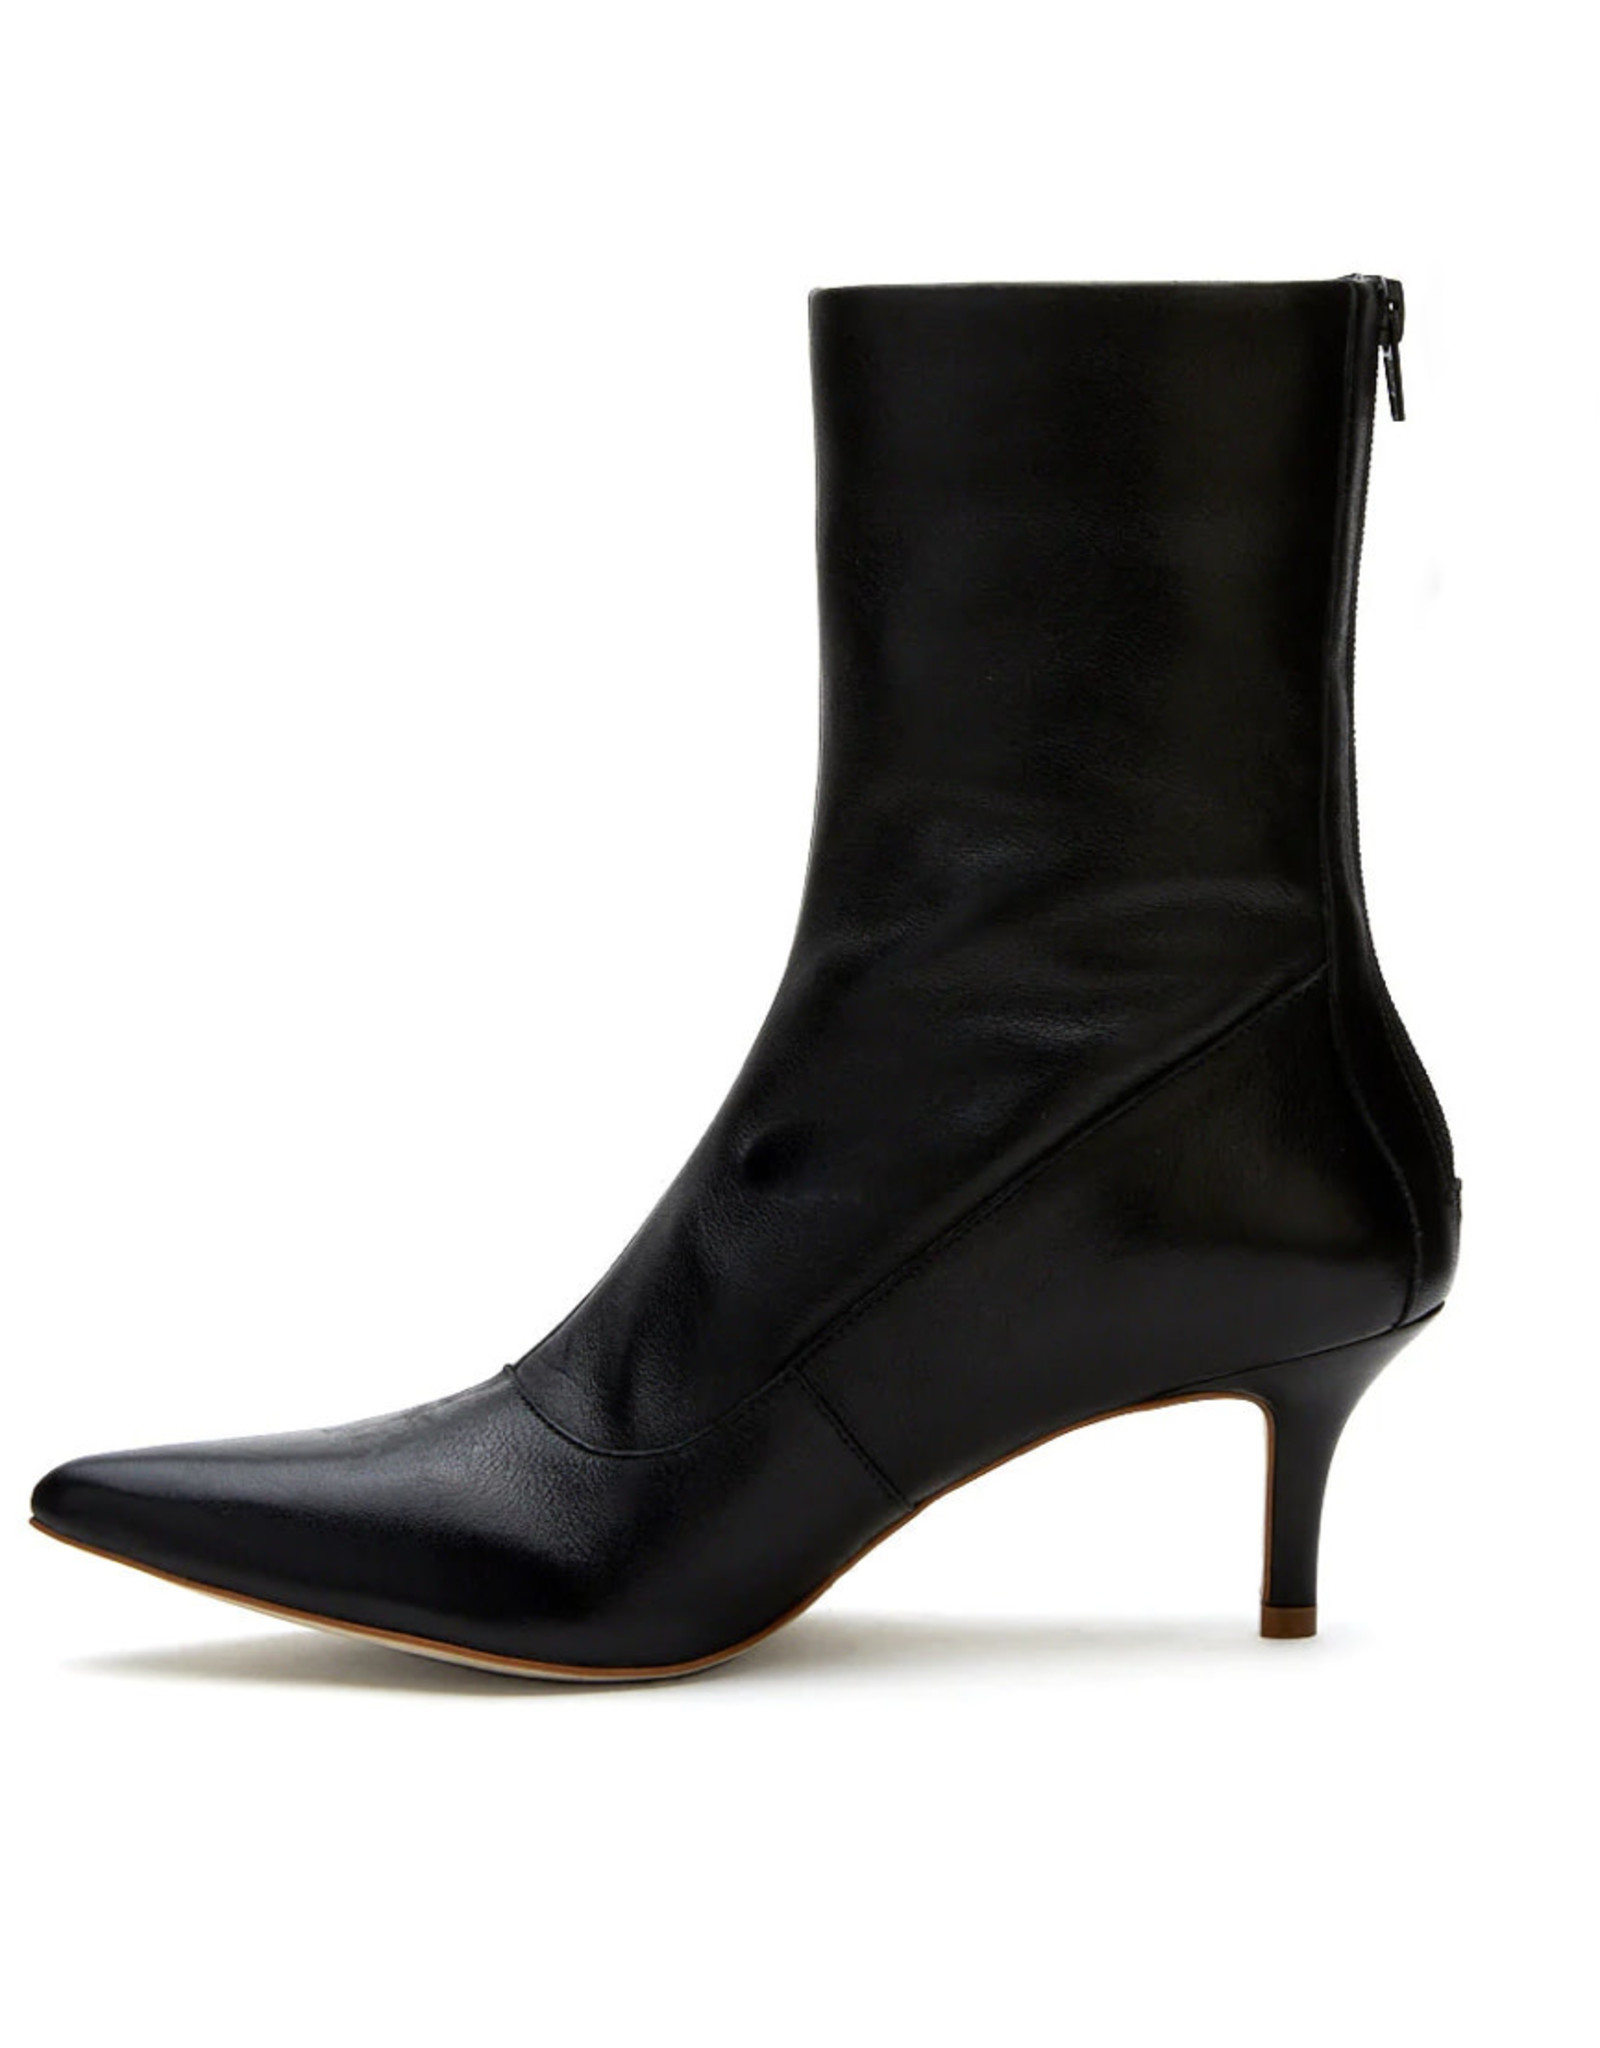 Matisse CiCi Black Leather Boots - Rhinestone Angel